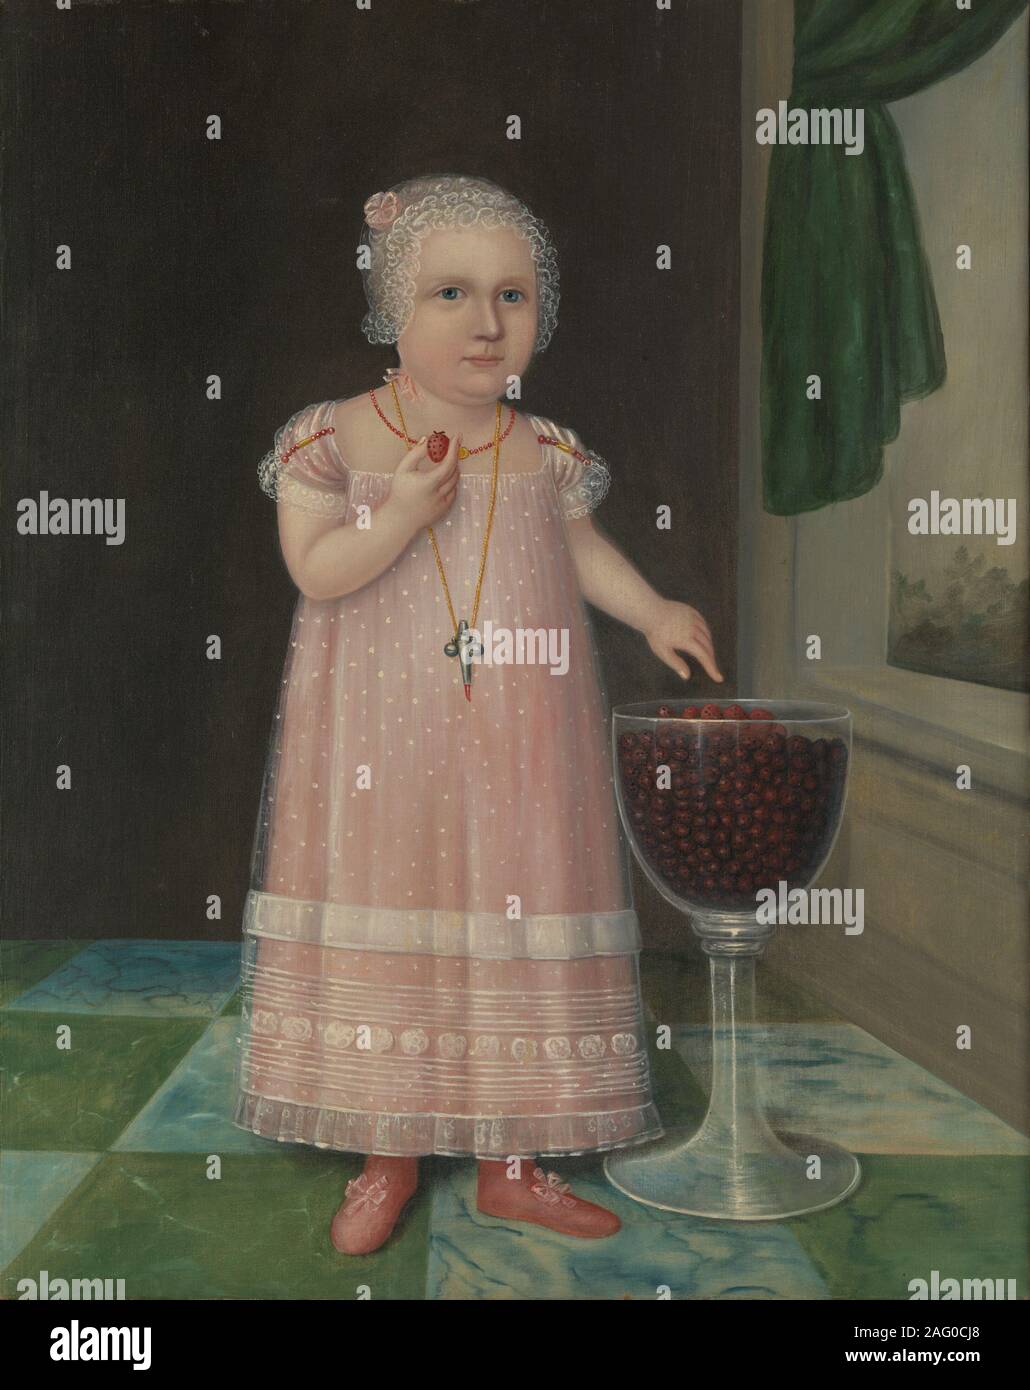 Emma Van Name, ca. 1805. Stock Photo